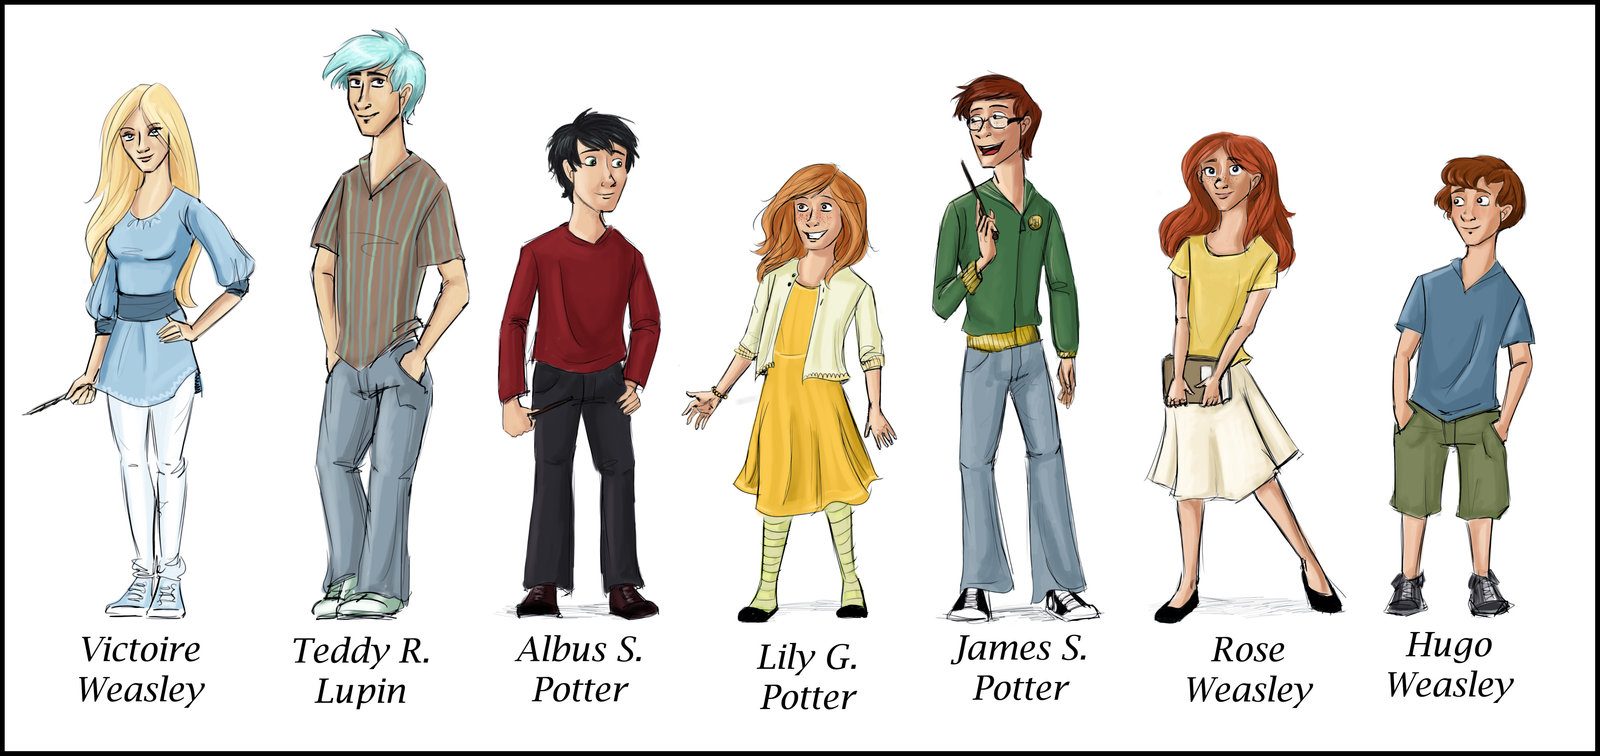 Harry Potter Next Generation - The new kids from Harry Potter Fan Art